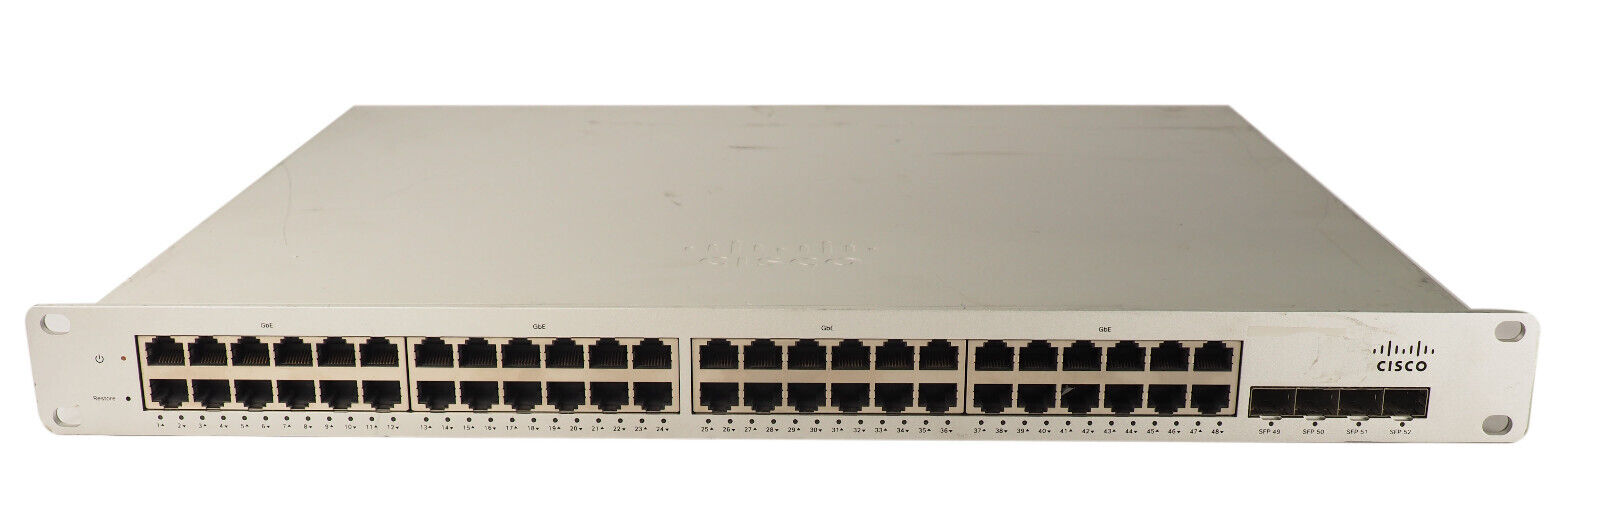 Cisco Meraki MS220-48-HW 48 Port Gigabit Ethernet Switch +4 SFP Ports